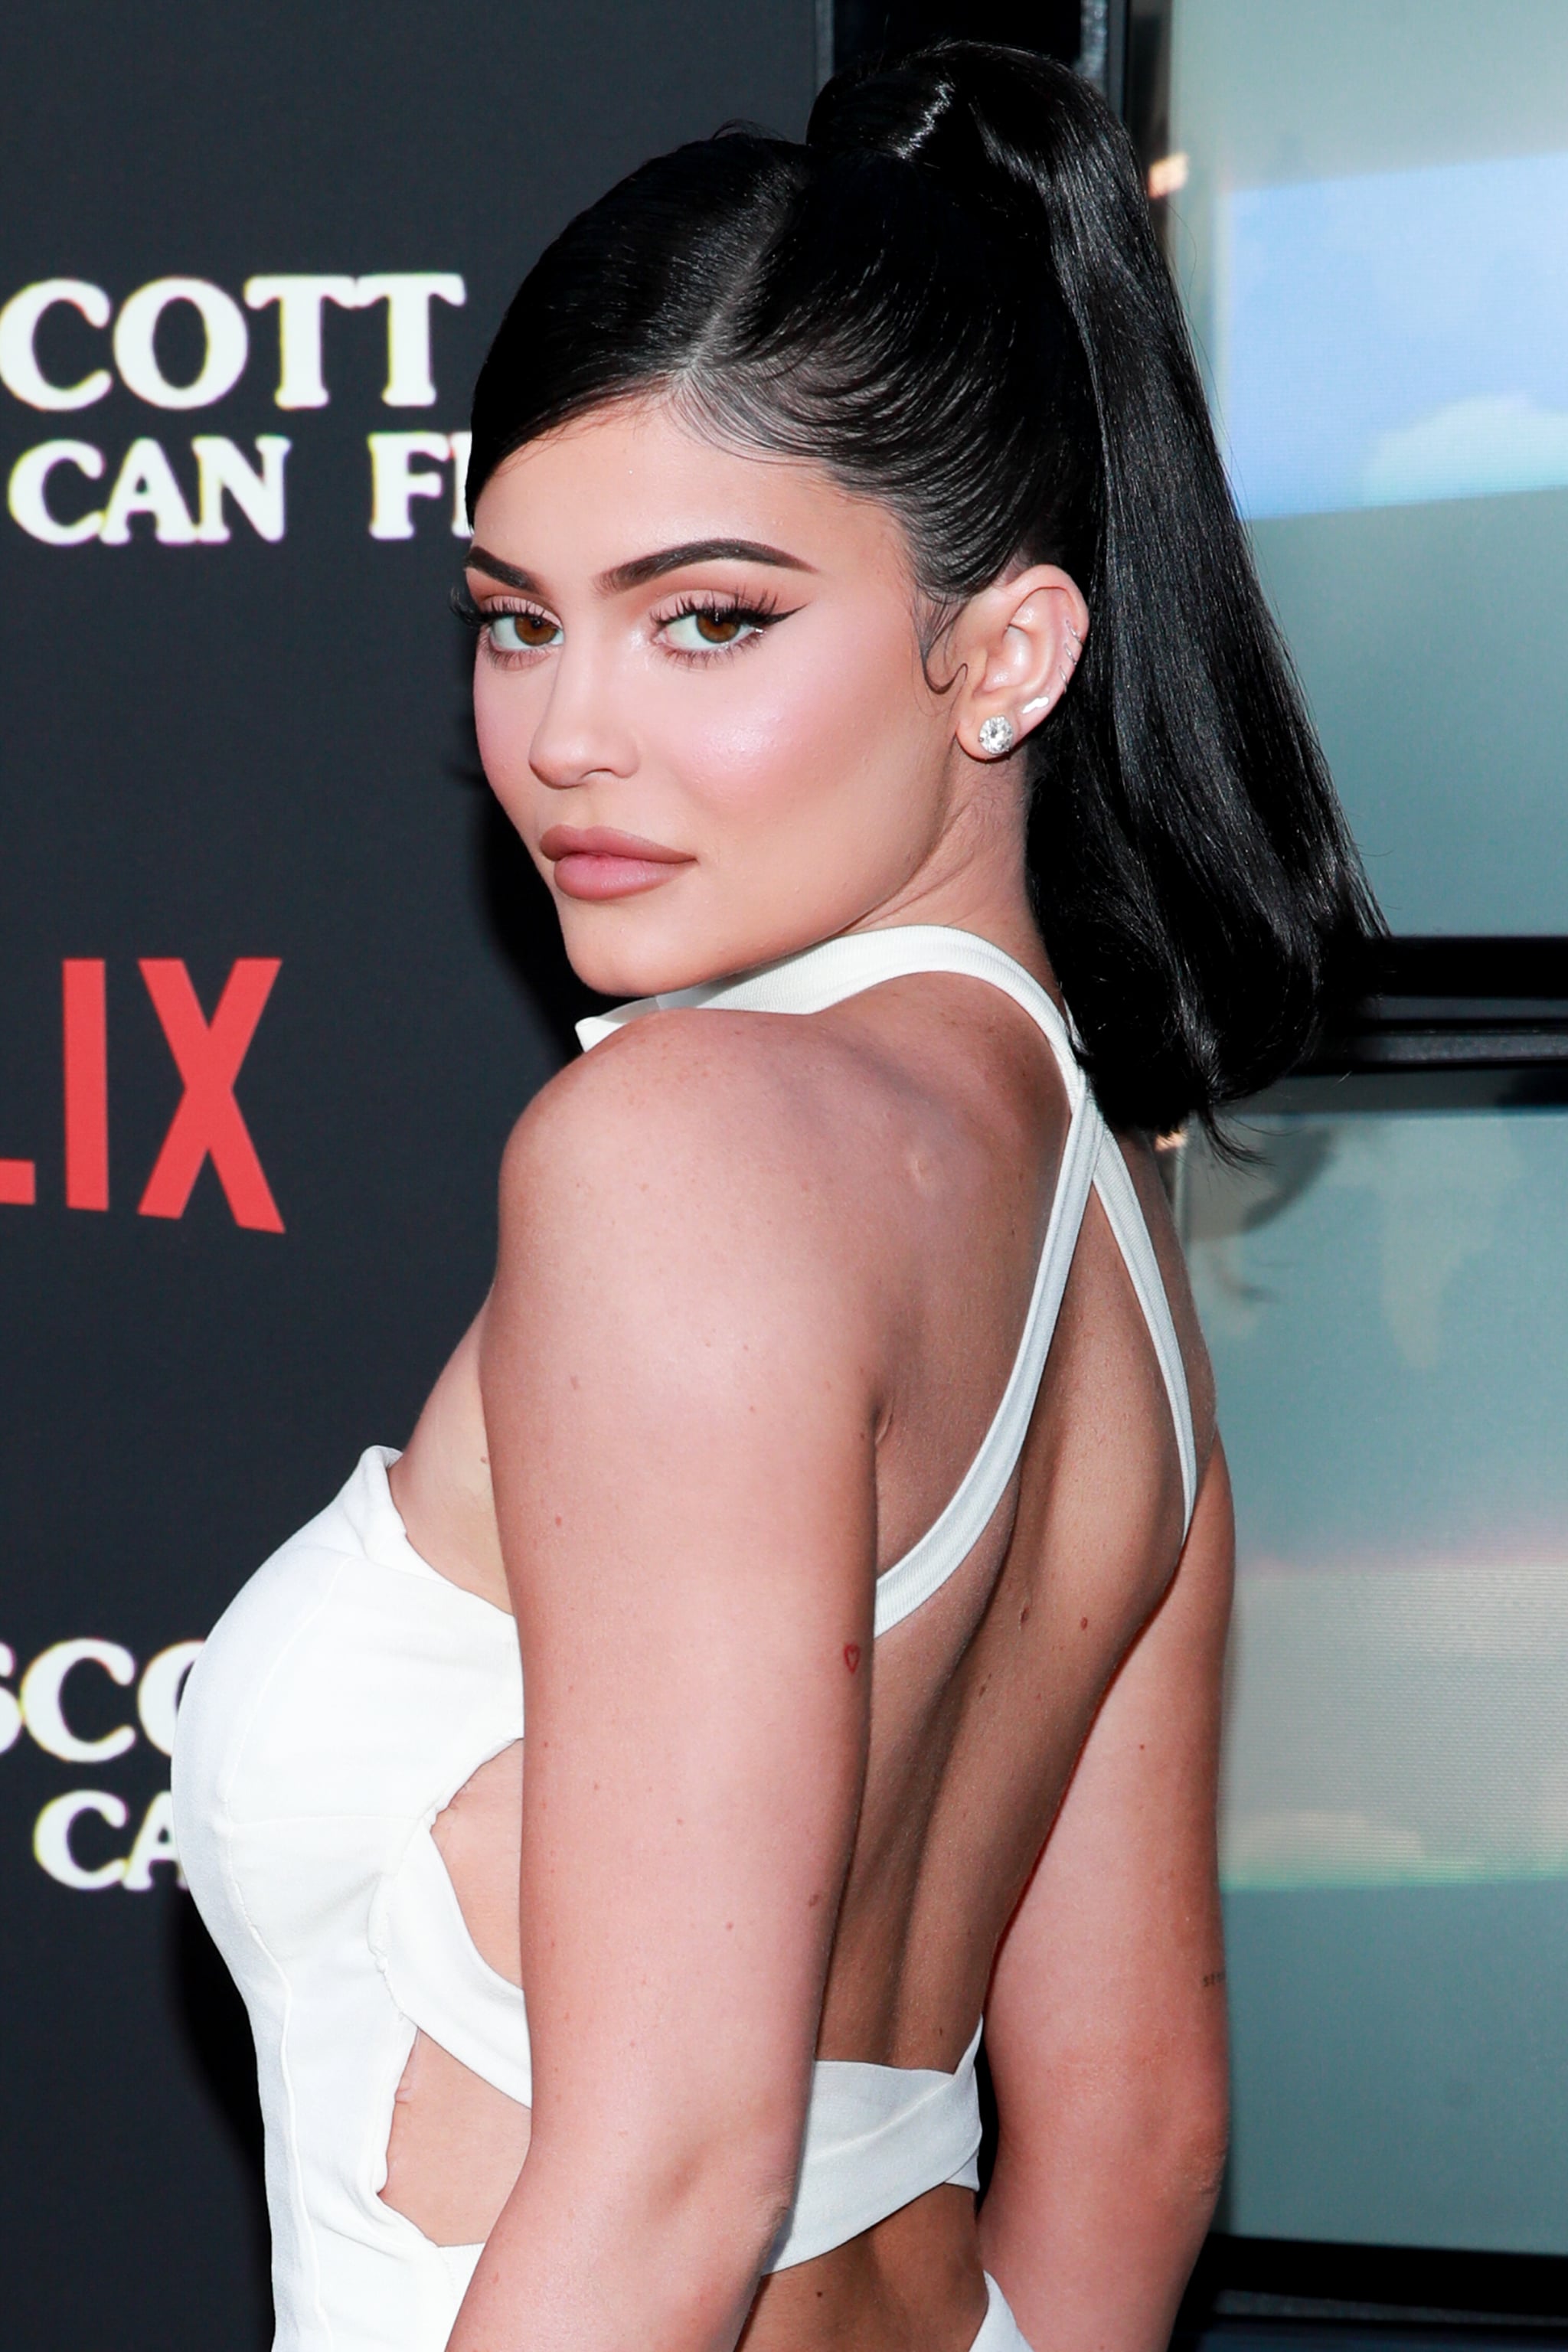 SANTA MONICA, CALIFORNIA - AUGUST 27: Kylie Jenner attends the premiere of Netflix's 